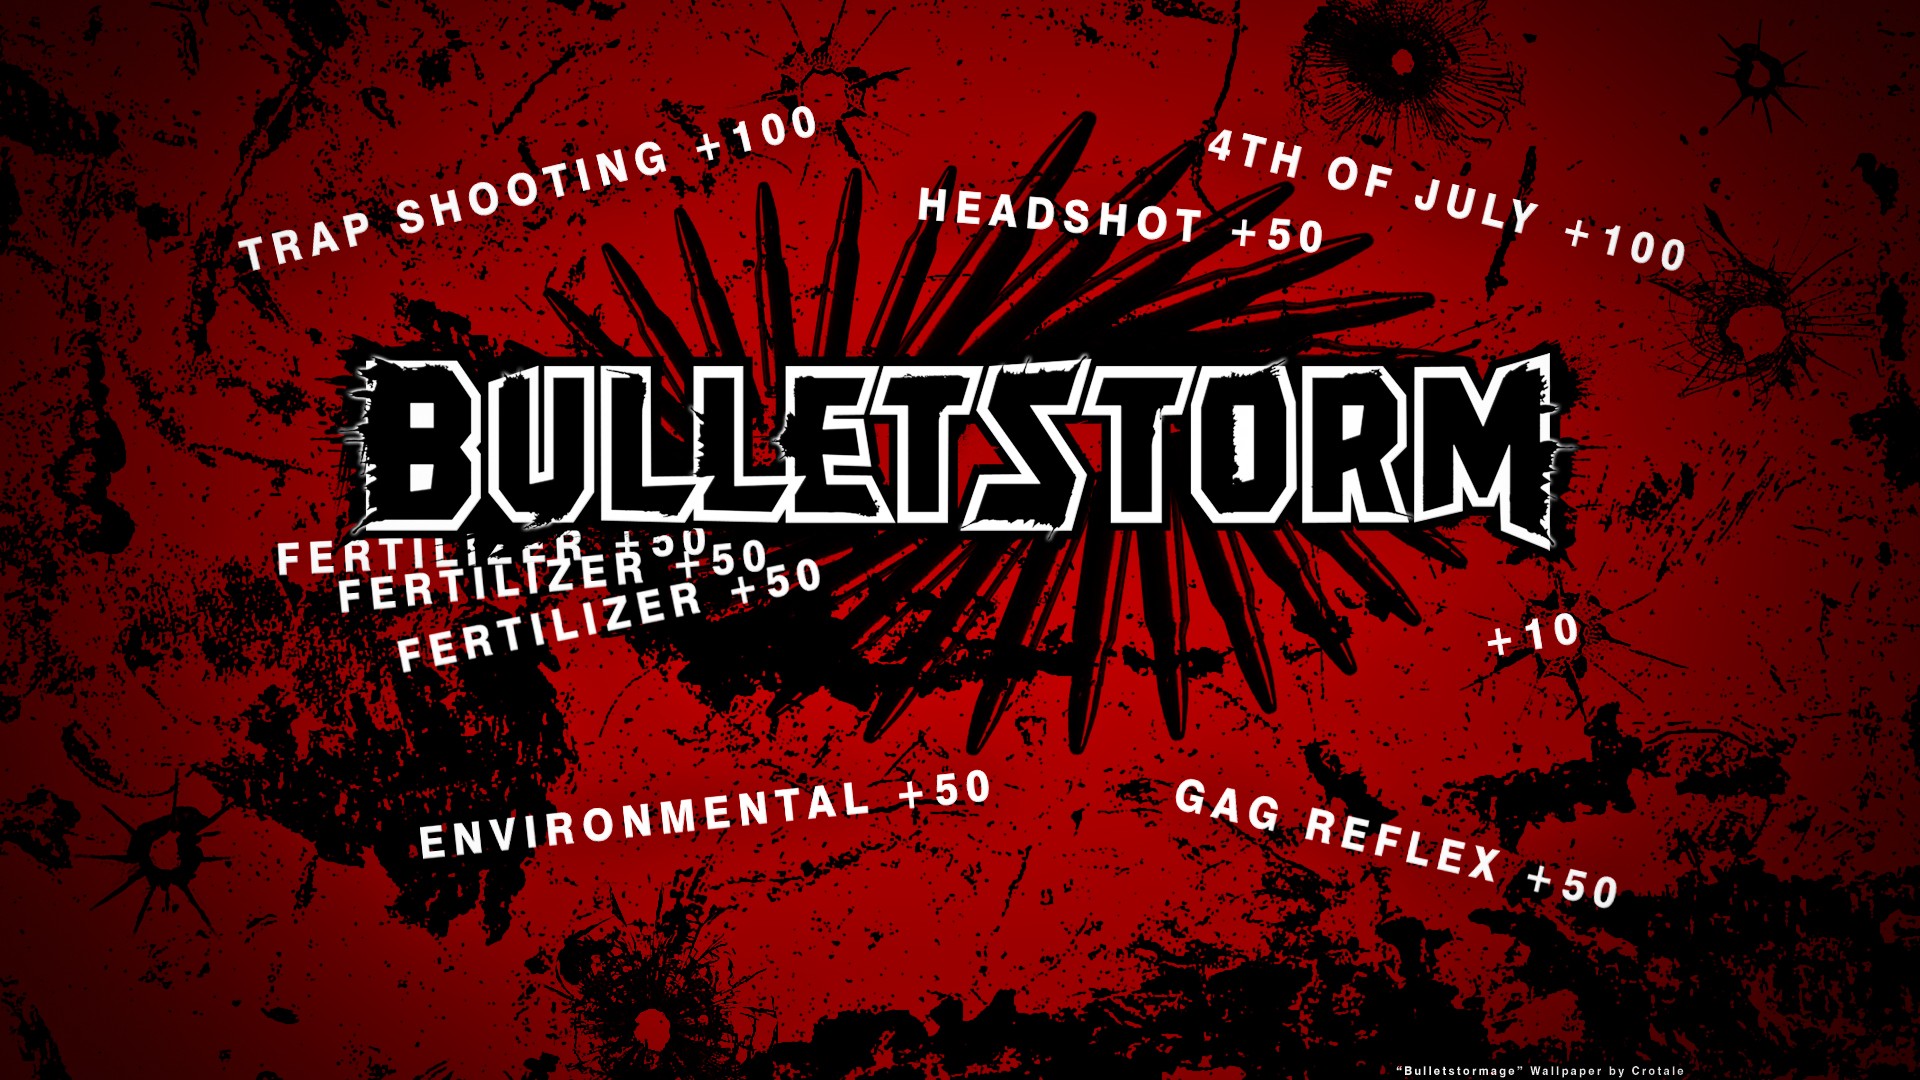 Video Game Bulletstorm 1920x1080